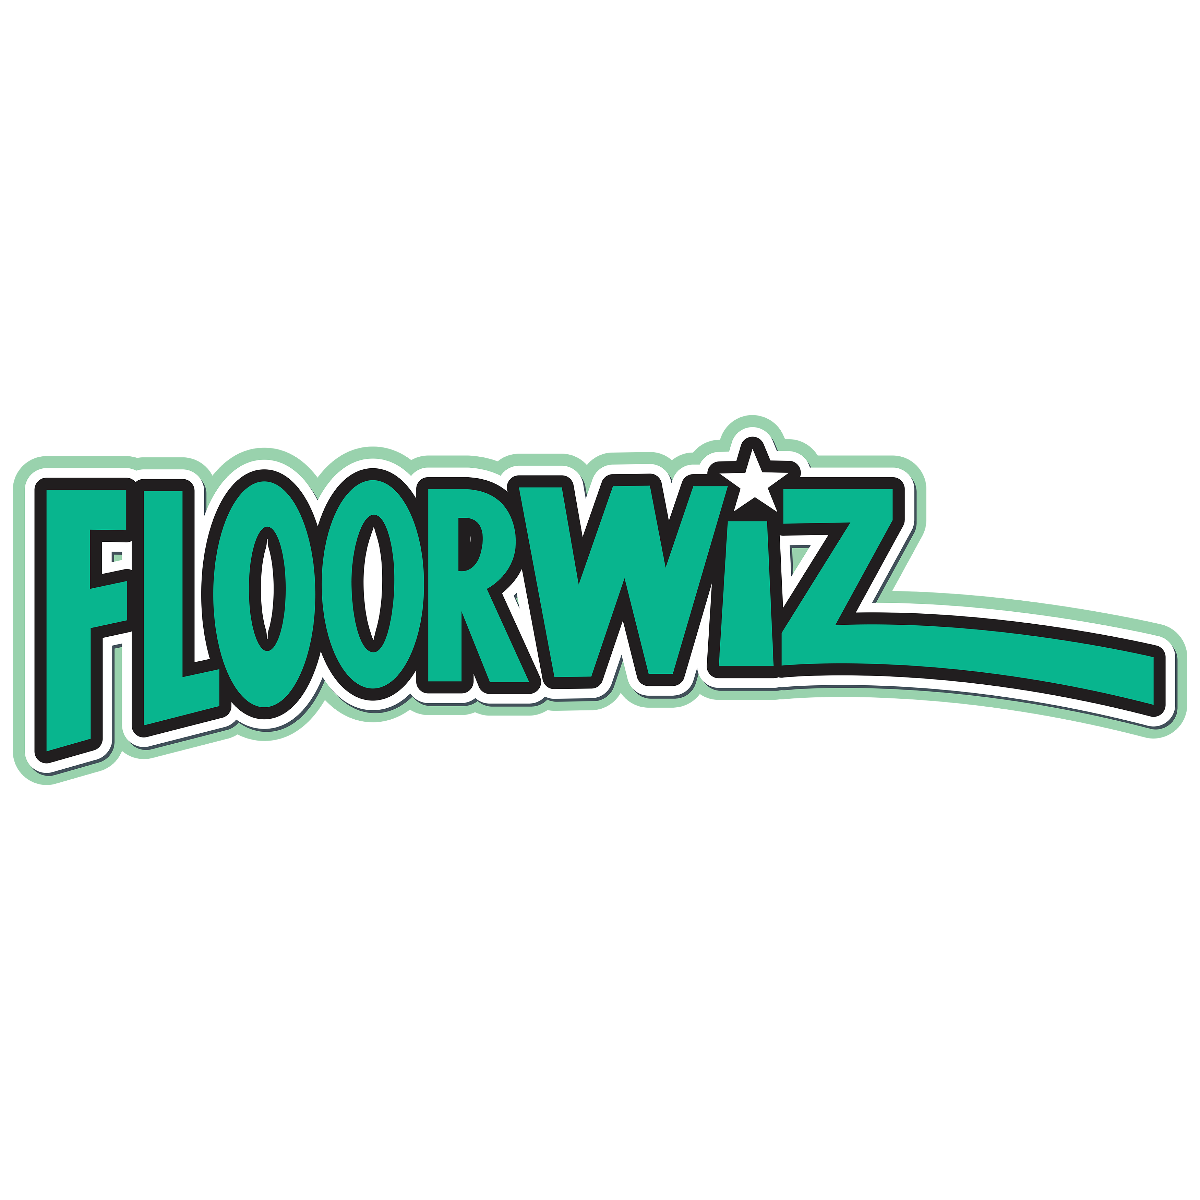 floorwiz